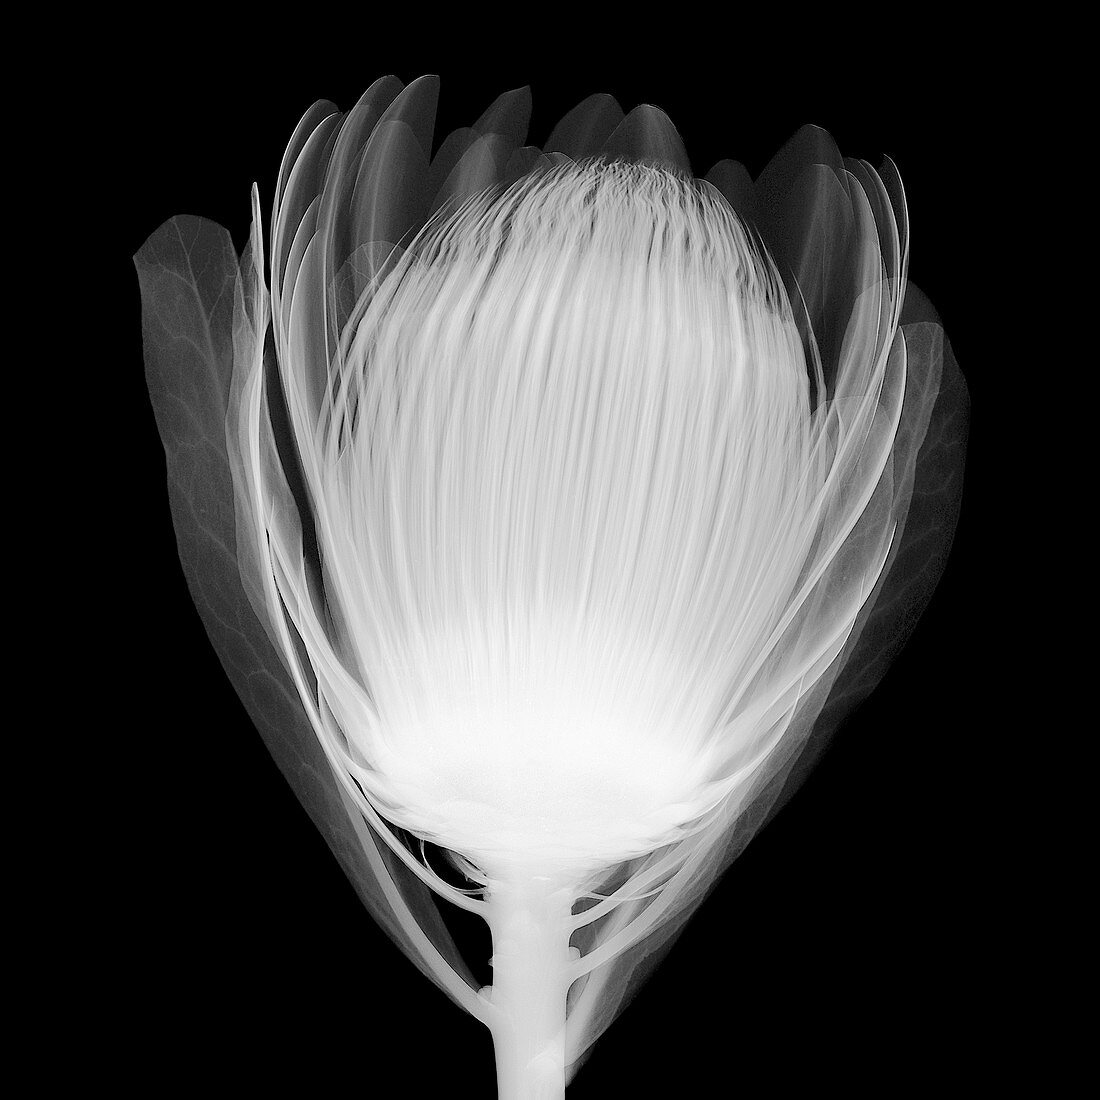 Sugar bush (Protea sp.), X-ray